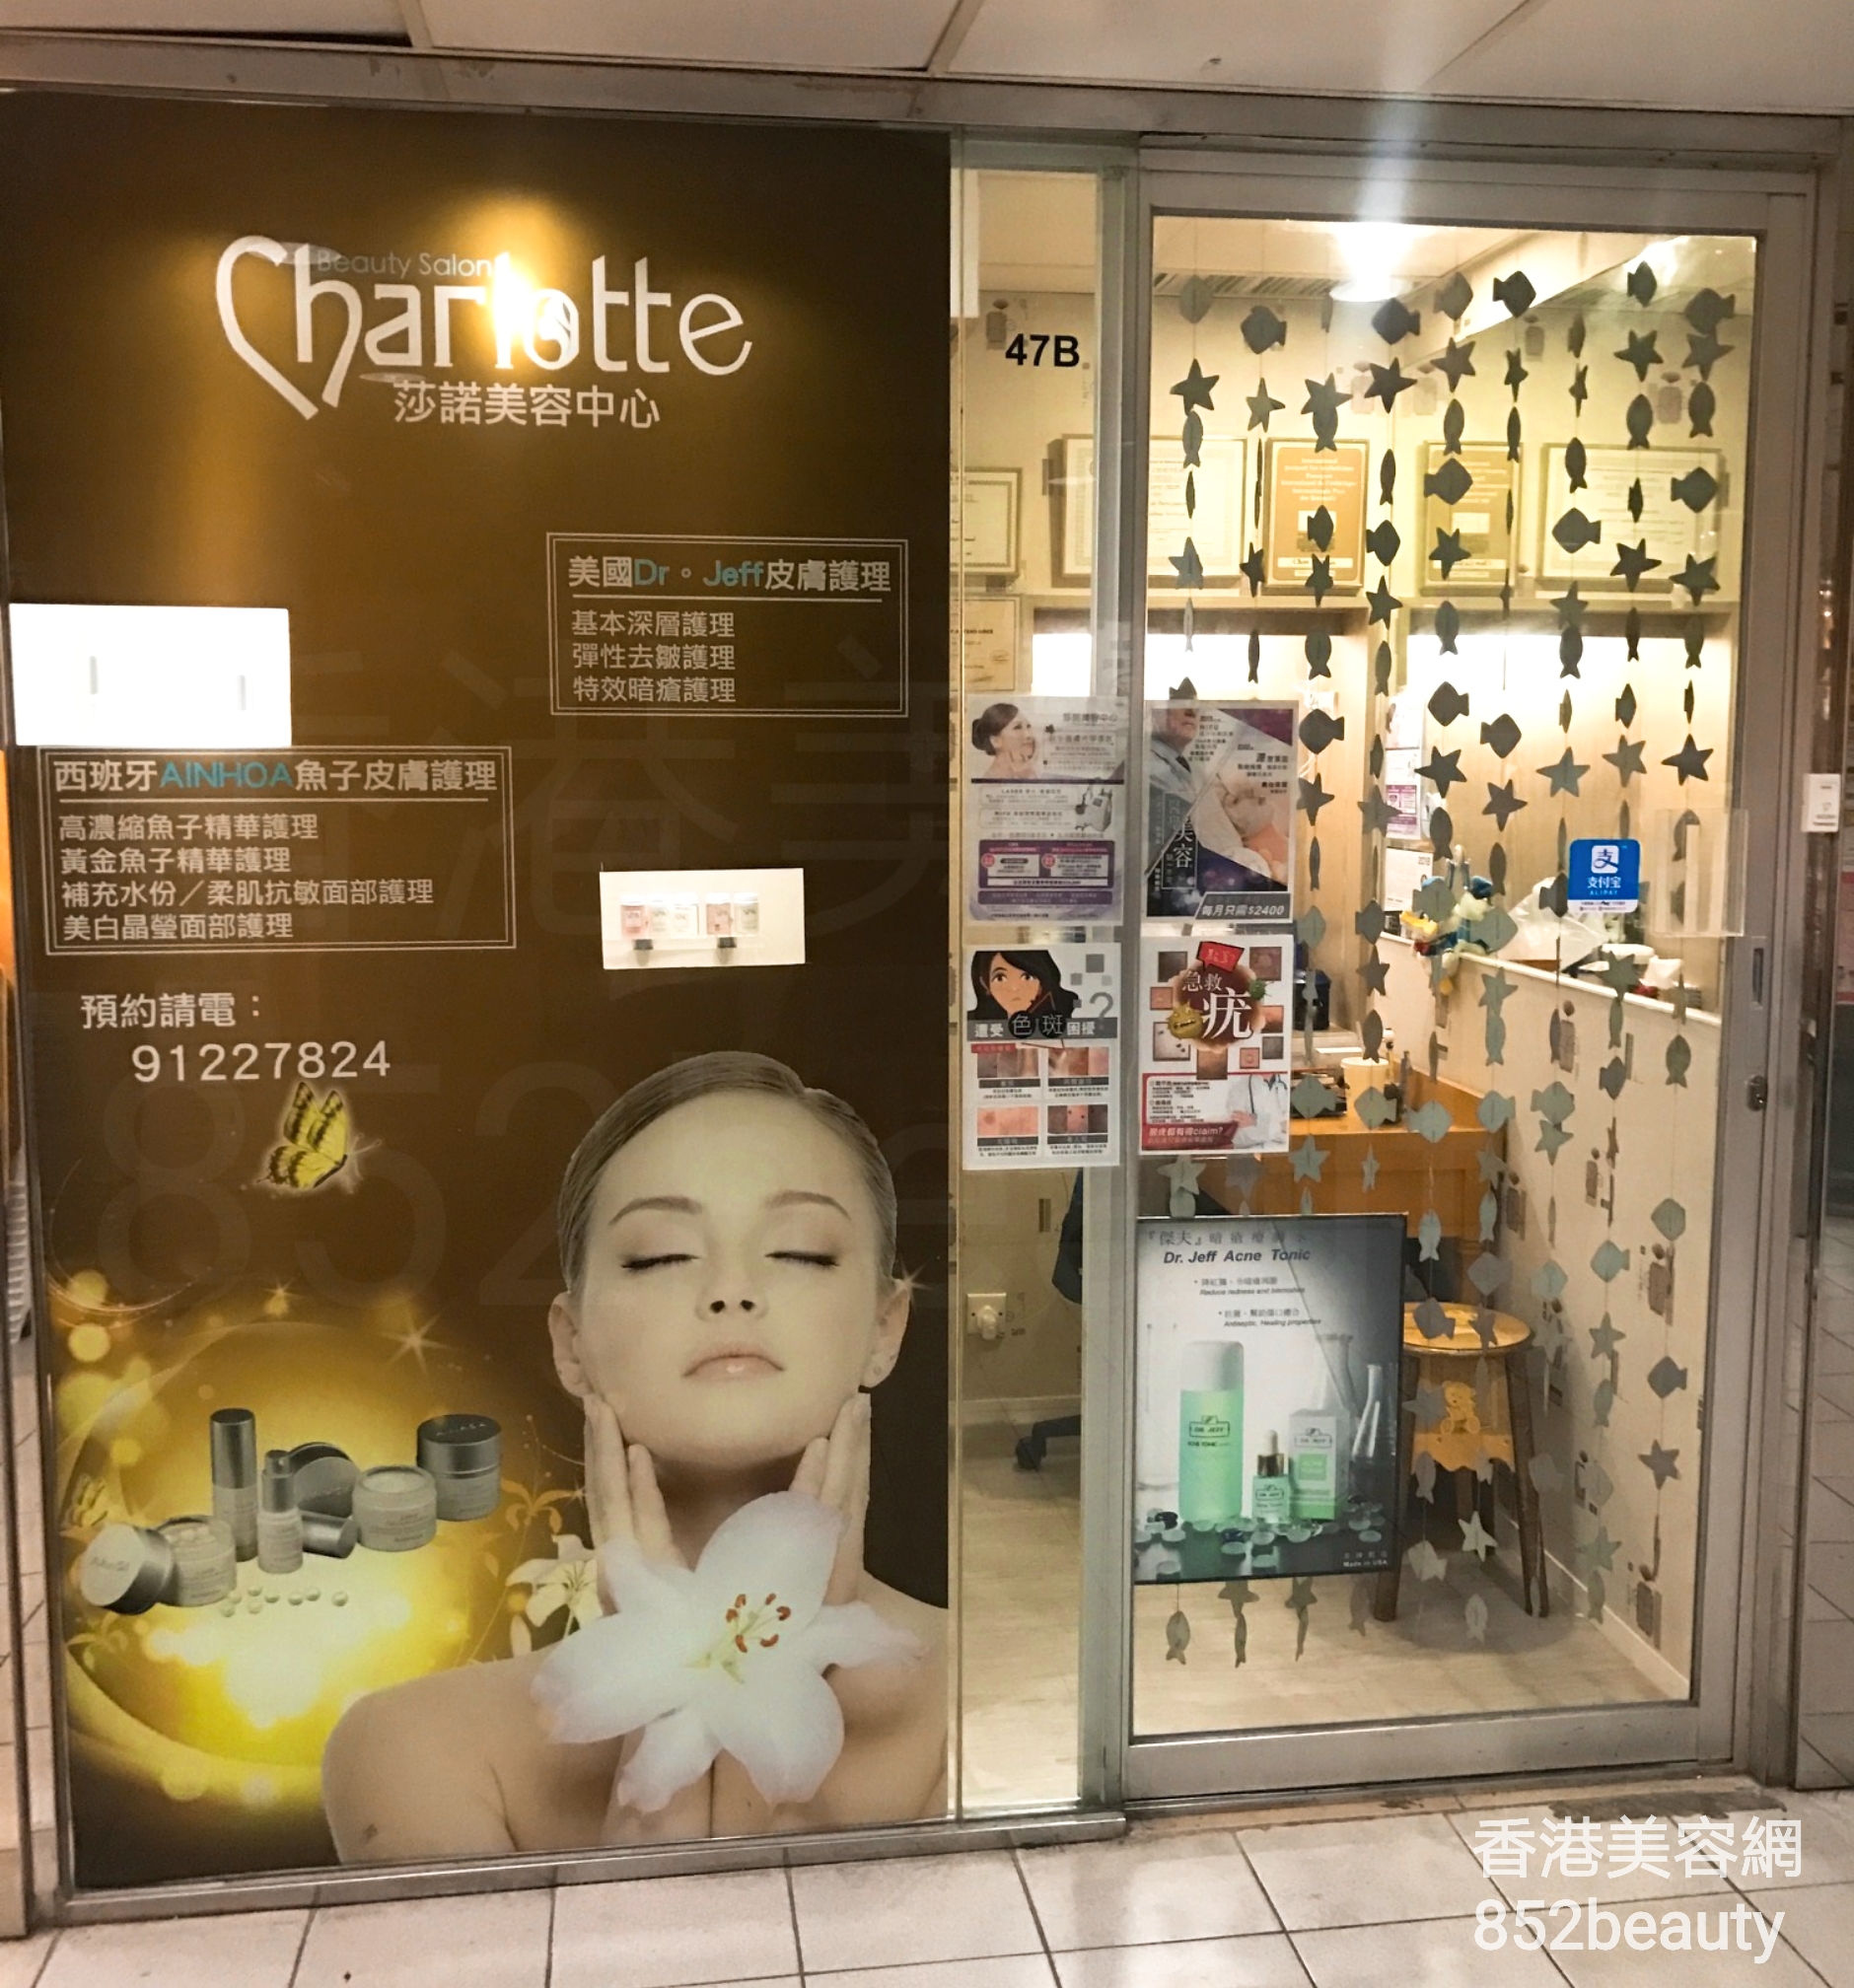 Hair Removal: 莎諾美容中心 Charlotte Beauty Salon